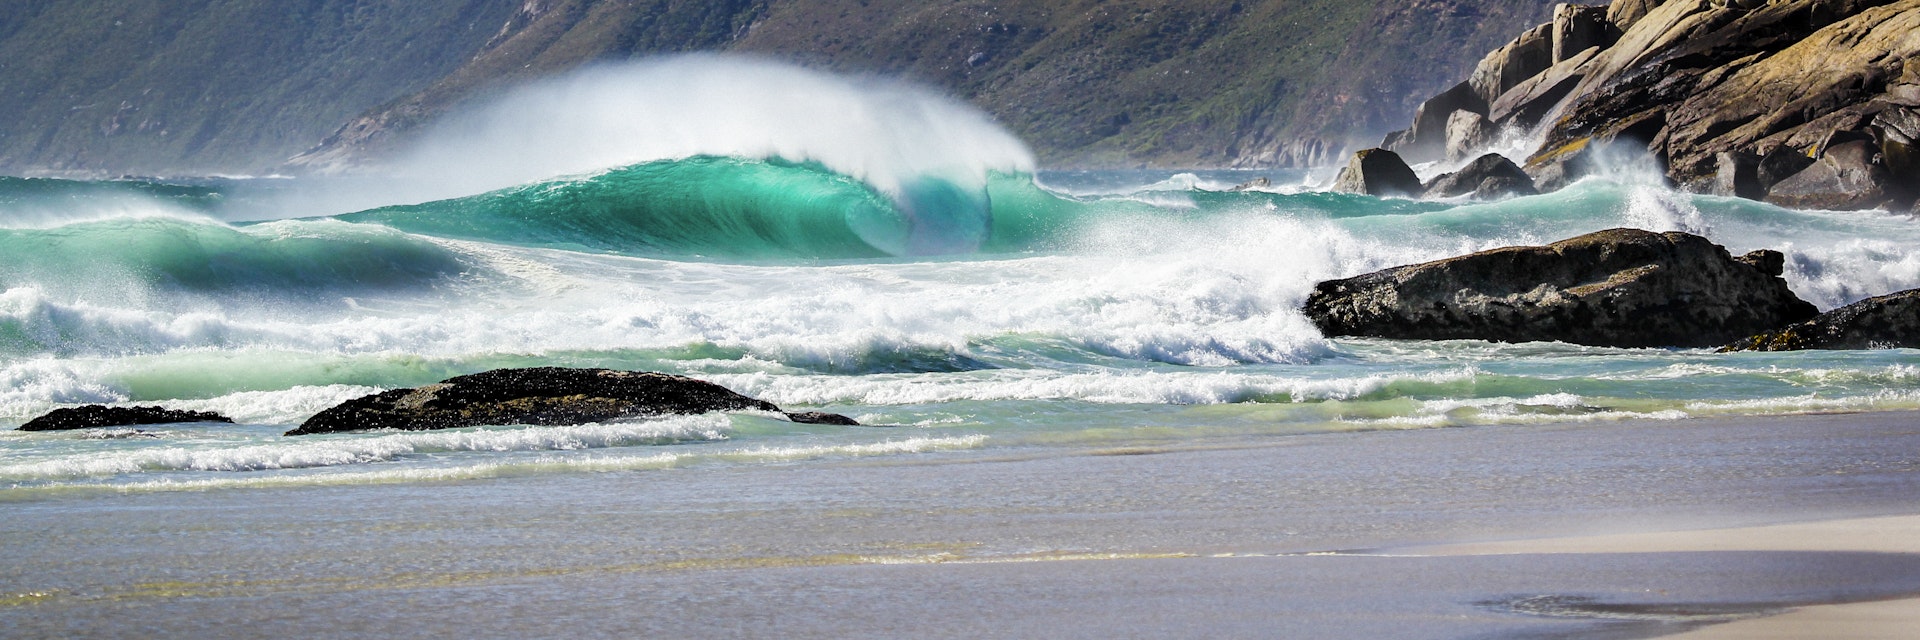 Wave at Noordhoek Beach in Cape Town, South Africa